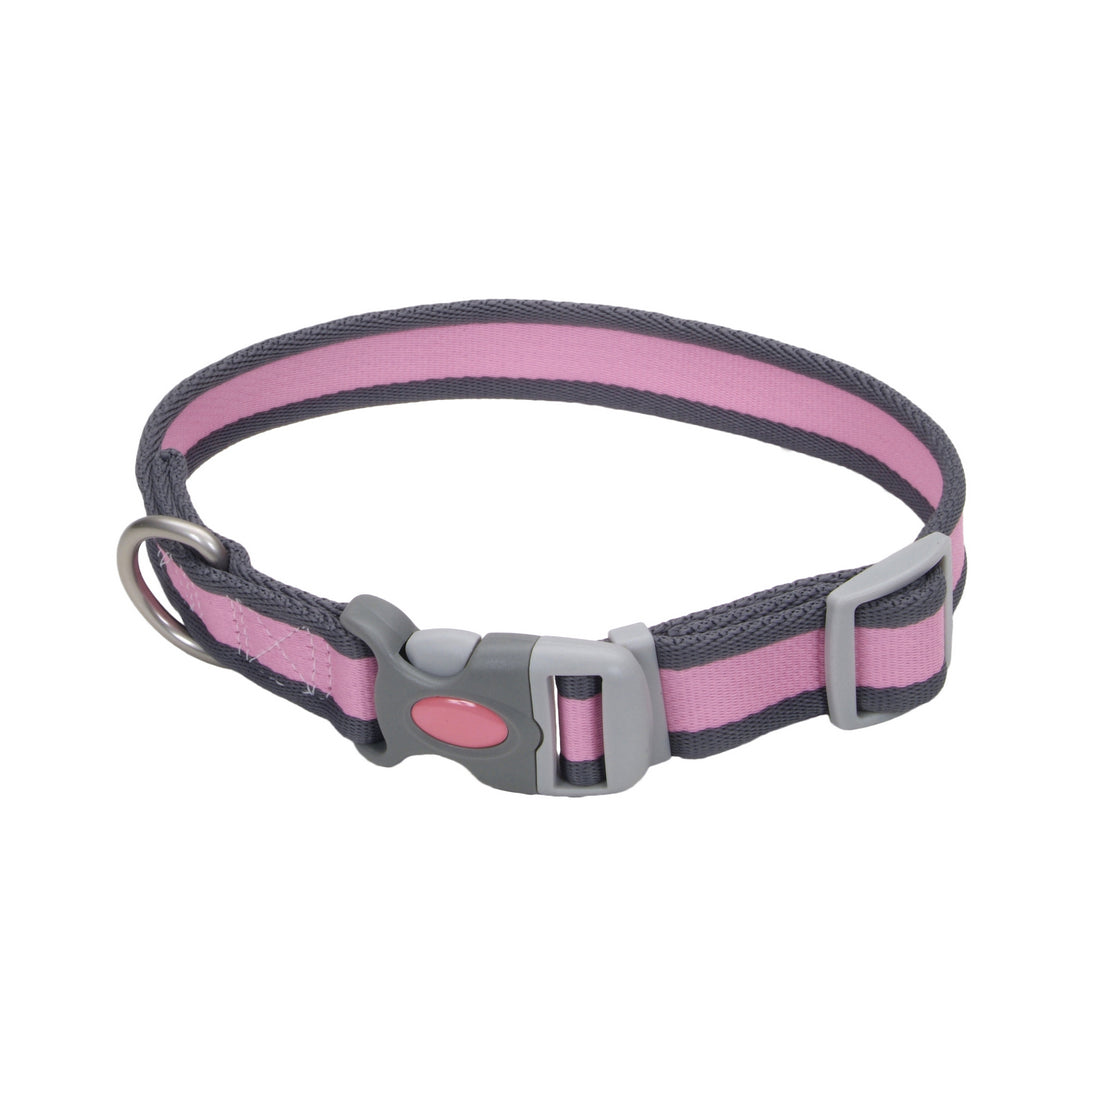 Coastal Pet Attire Pro Adjustable Reflective Collar 10-14" - 3/4" Pink with Gray